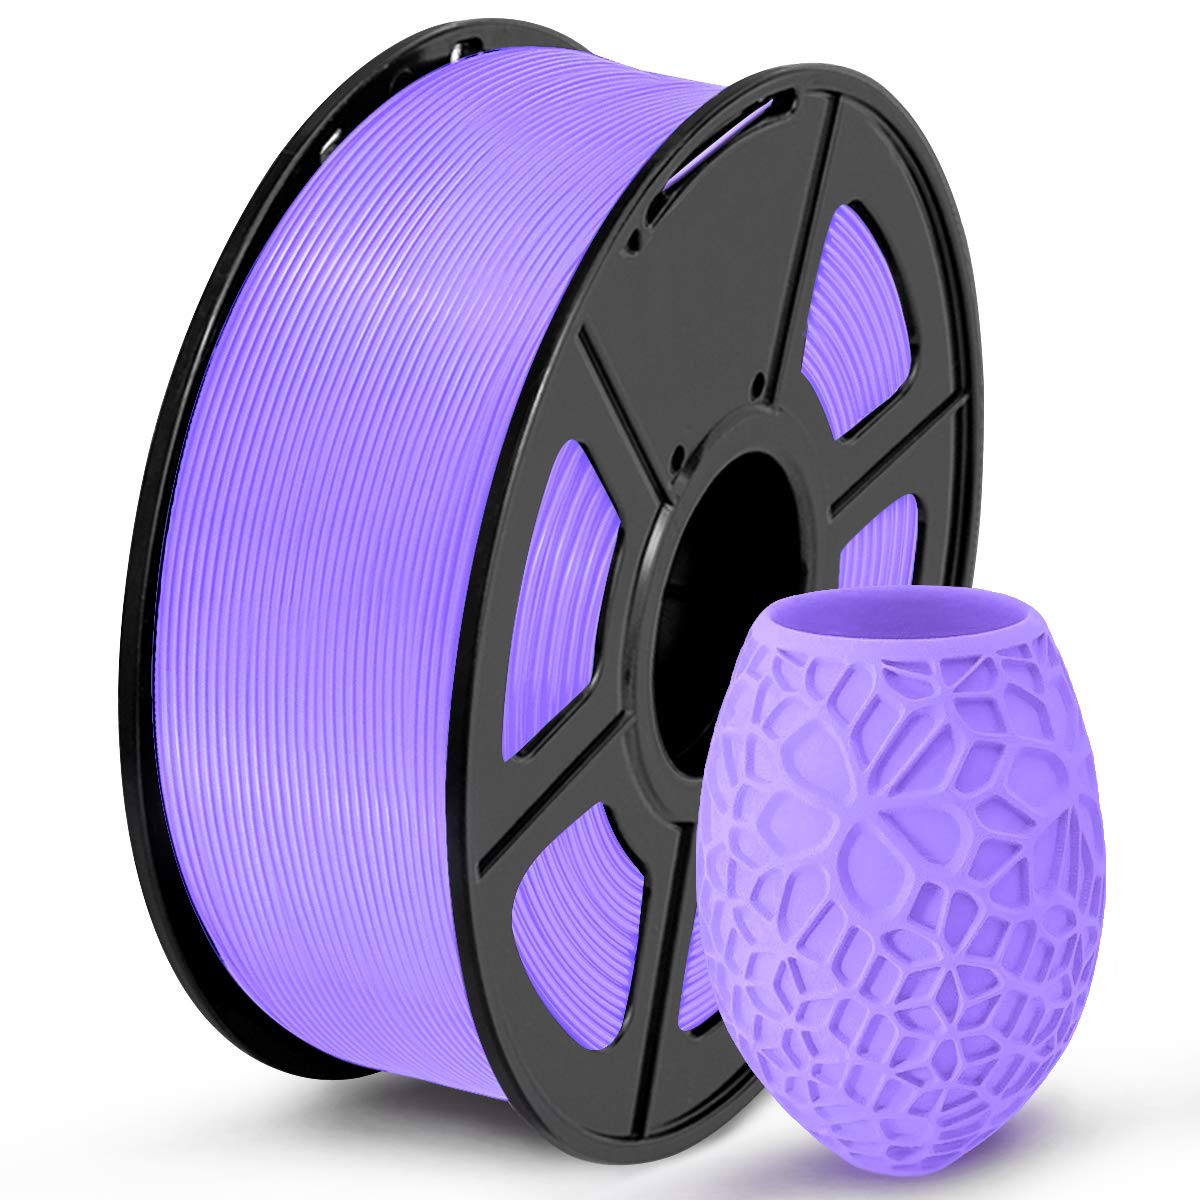 COLOR PURPURA SUNLU PLA filamento para impresora 3D, 1,75 PLA, precisión dimensional +/- 0.001 in, bobina de 2.2 lb 0.069 in